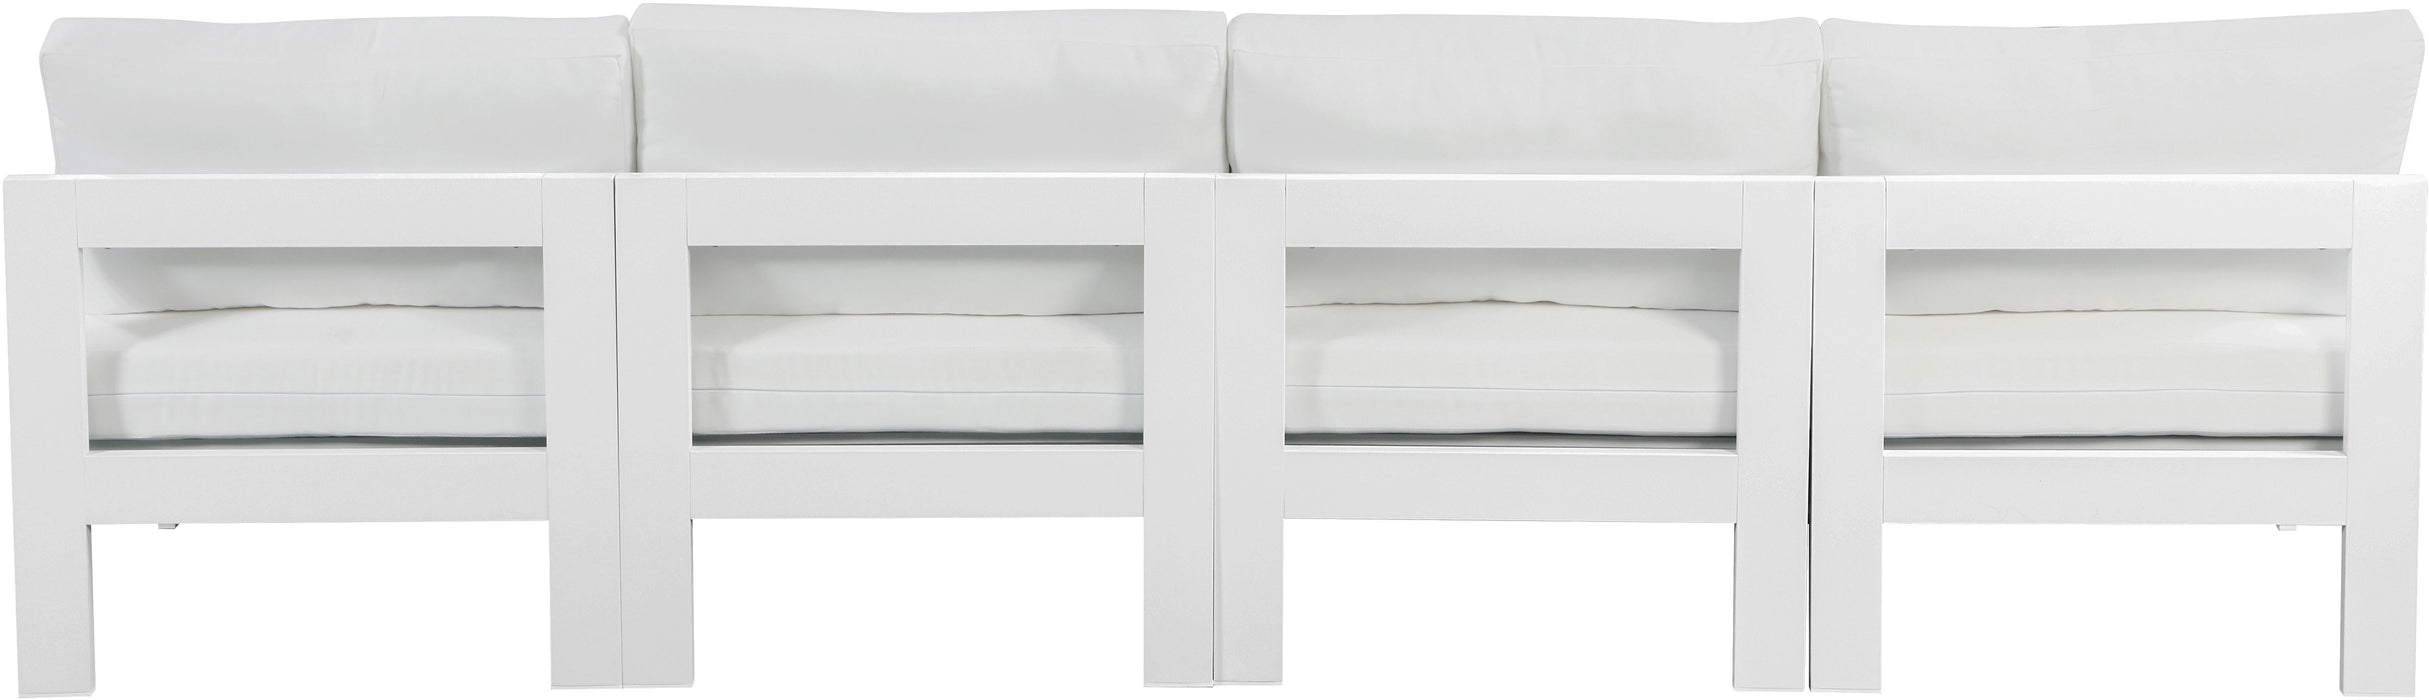 Nizuc - Outdoor Patio Modular Sofa 4 Seats - White